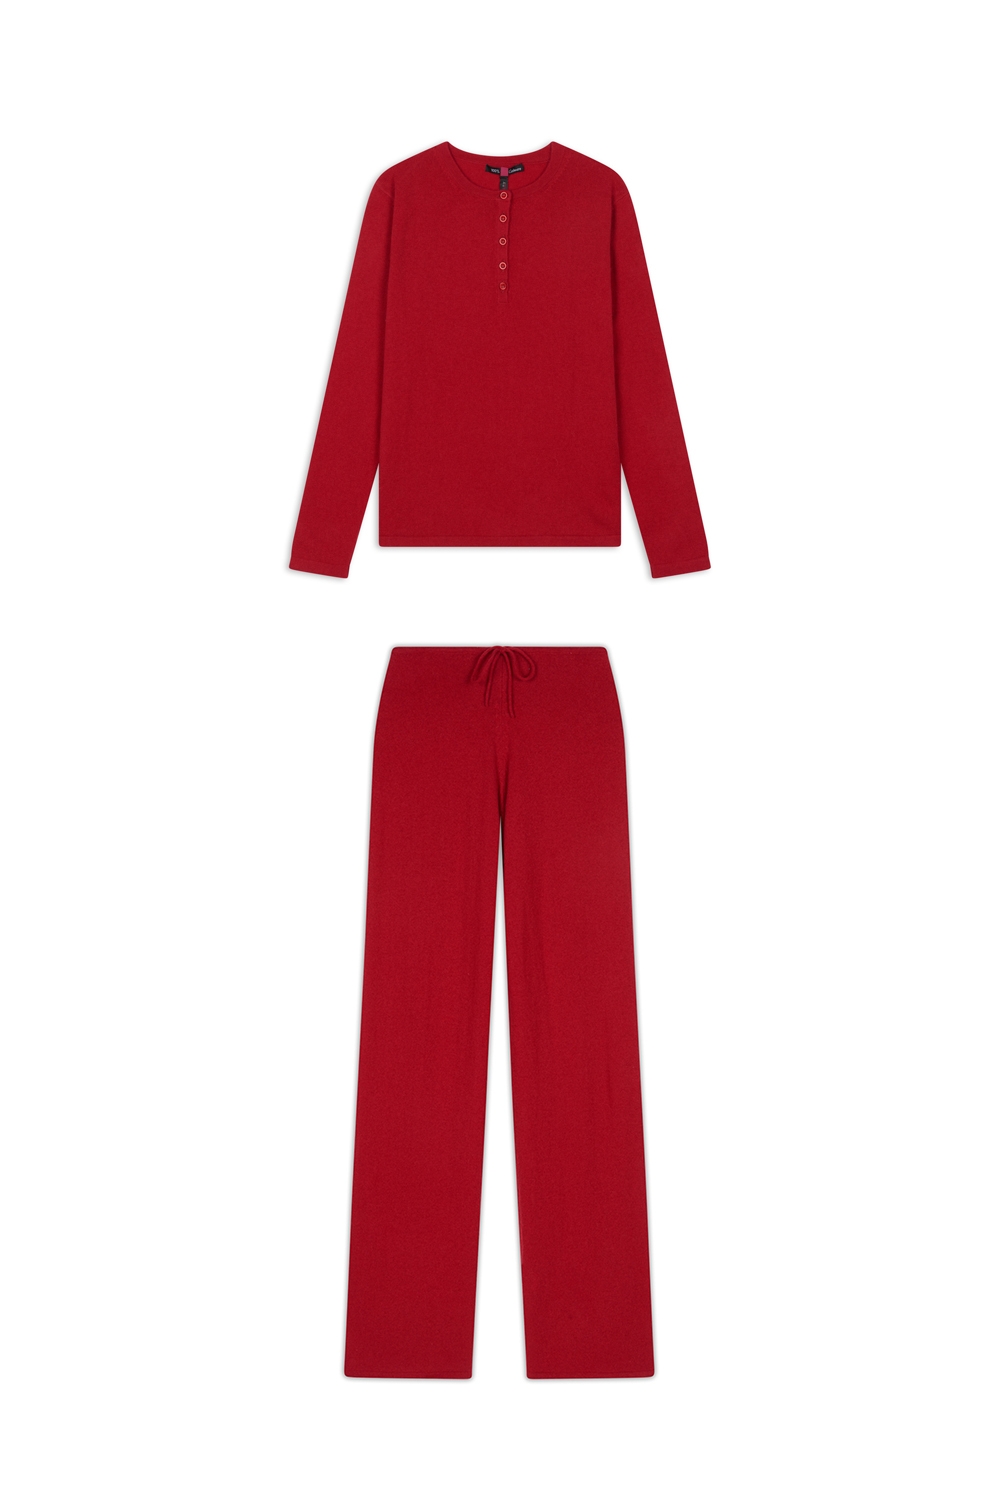 Cashmere ladies pyjamas loan blood red 2xl